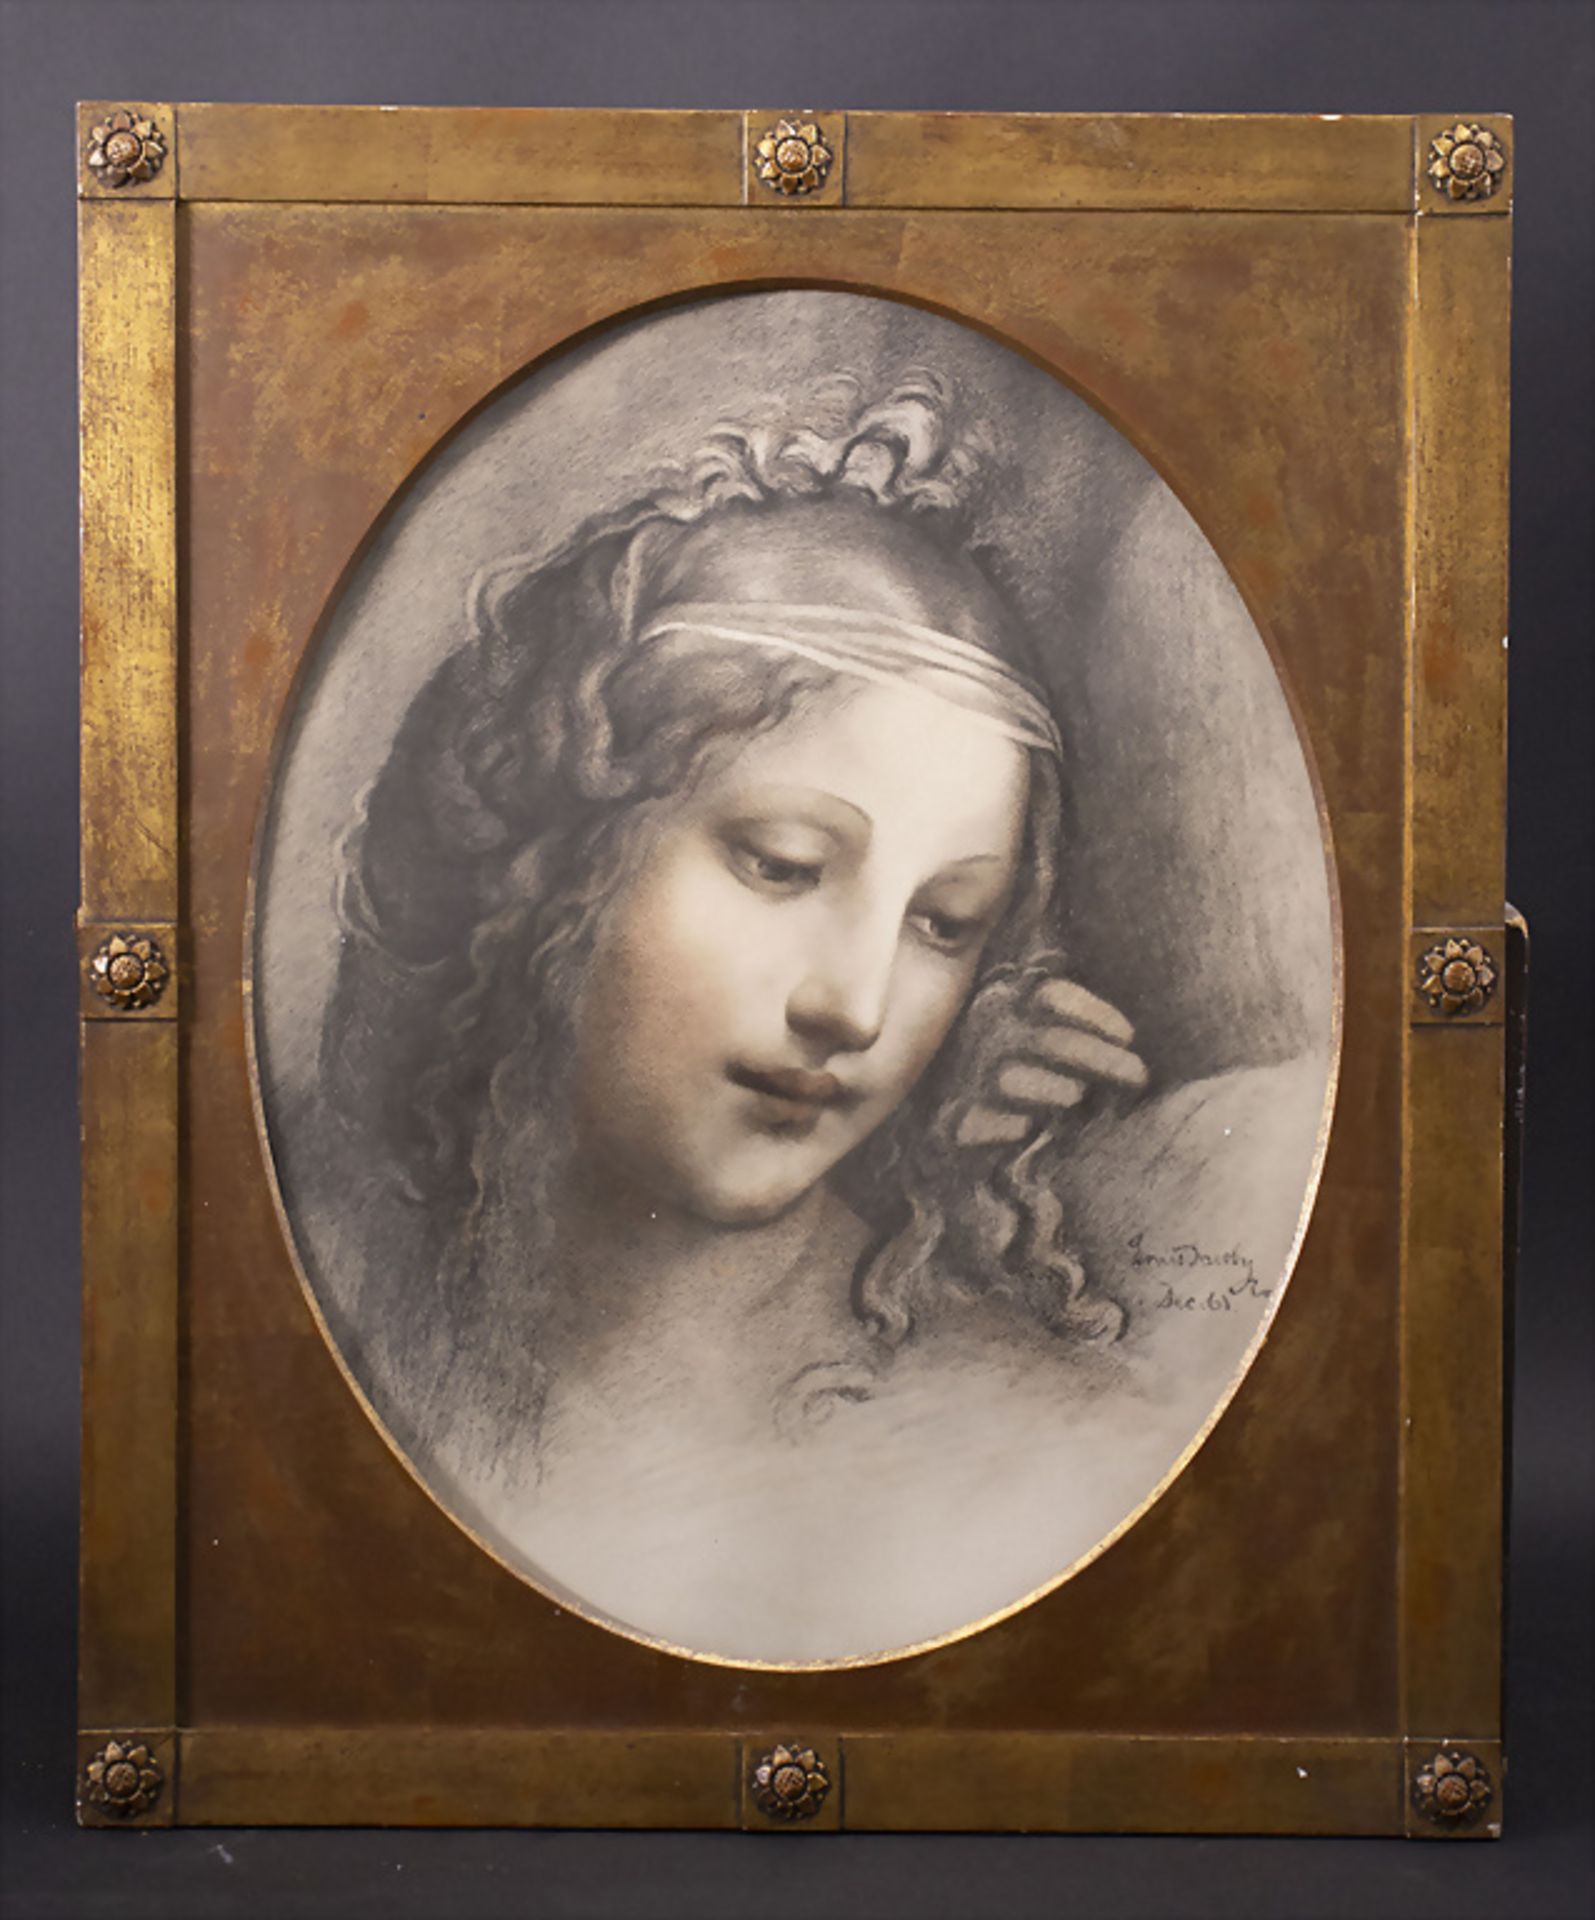 Künstler des 19. Jh., 'Damenportrait im Renaissance-Stil' / 'Ladies portrait in Renaissance style